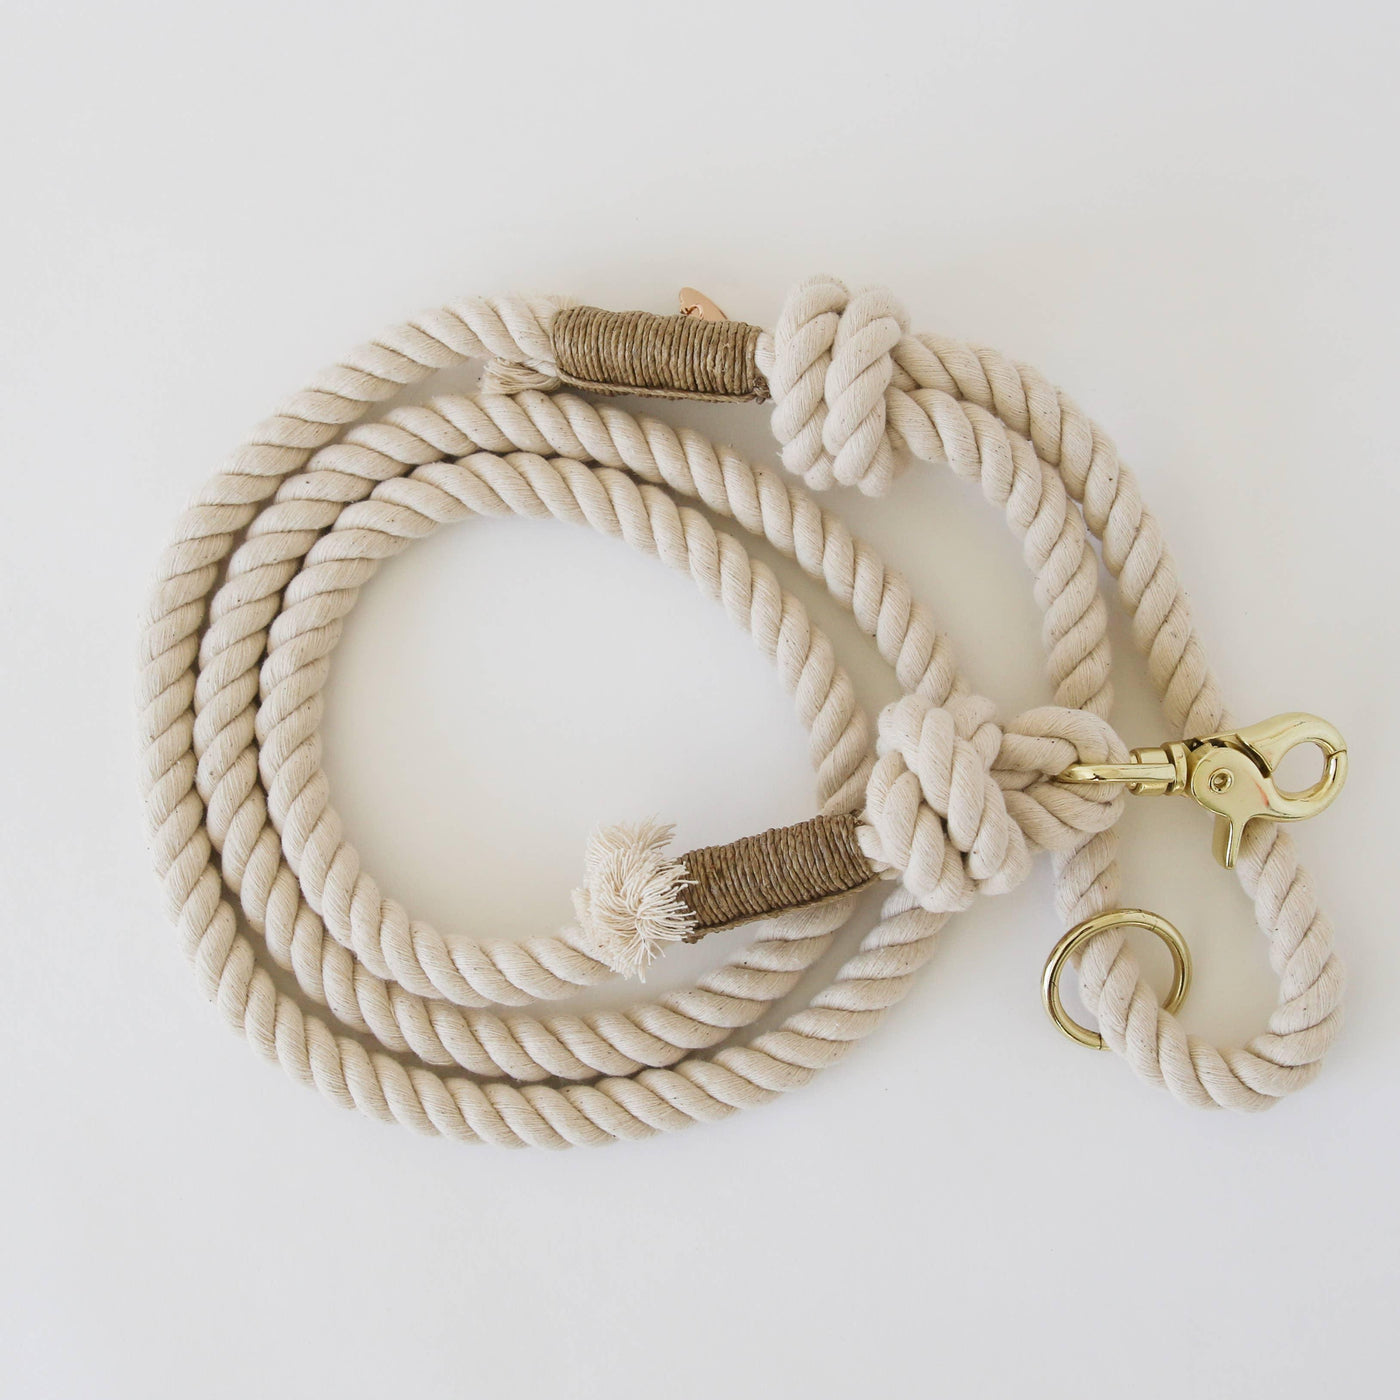 Dog Rope Leash - Birch and Bind